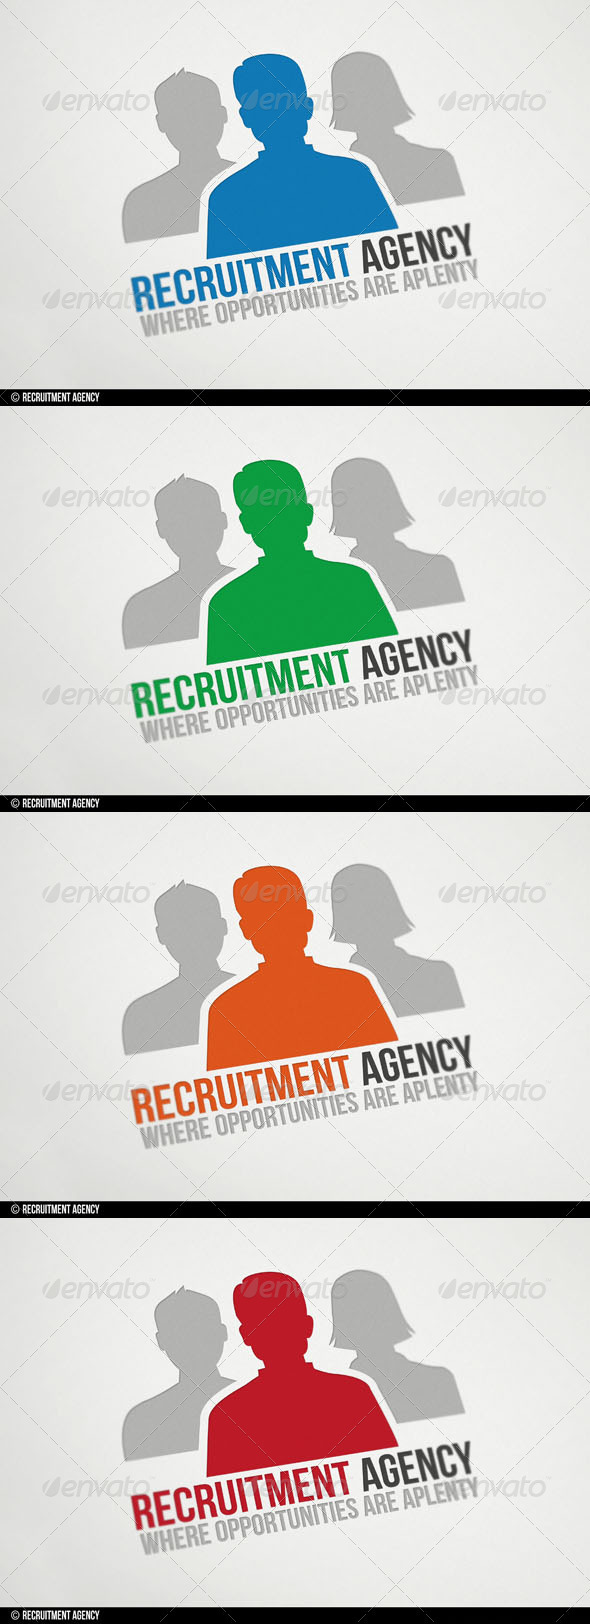 Recruitment Agency Logo